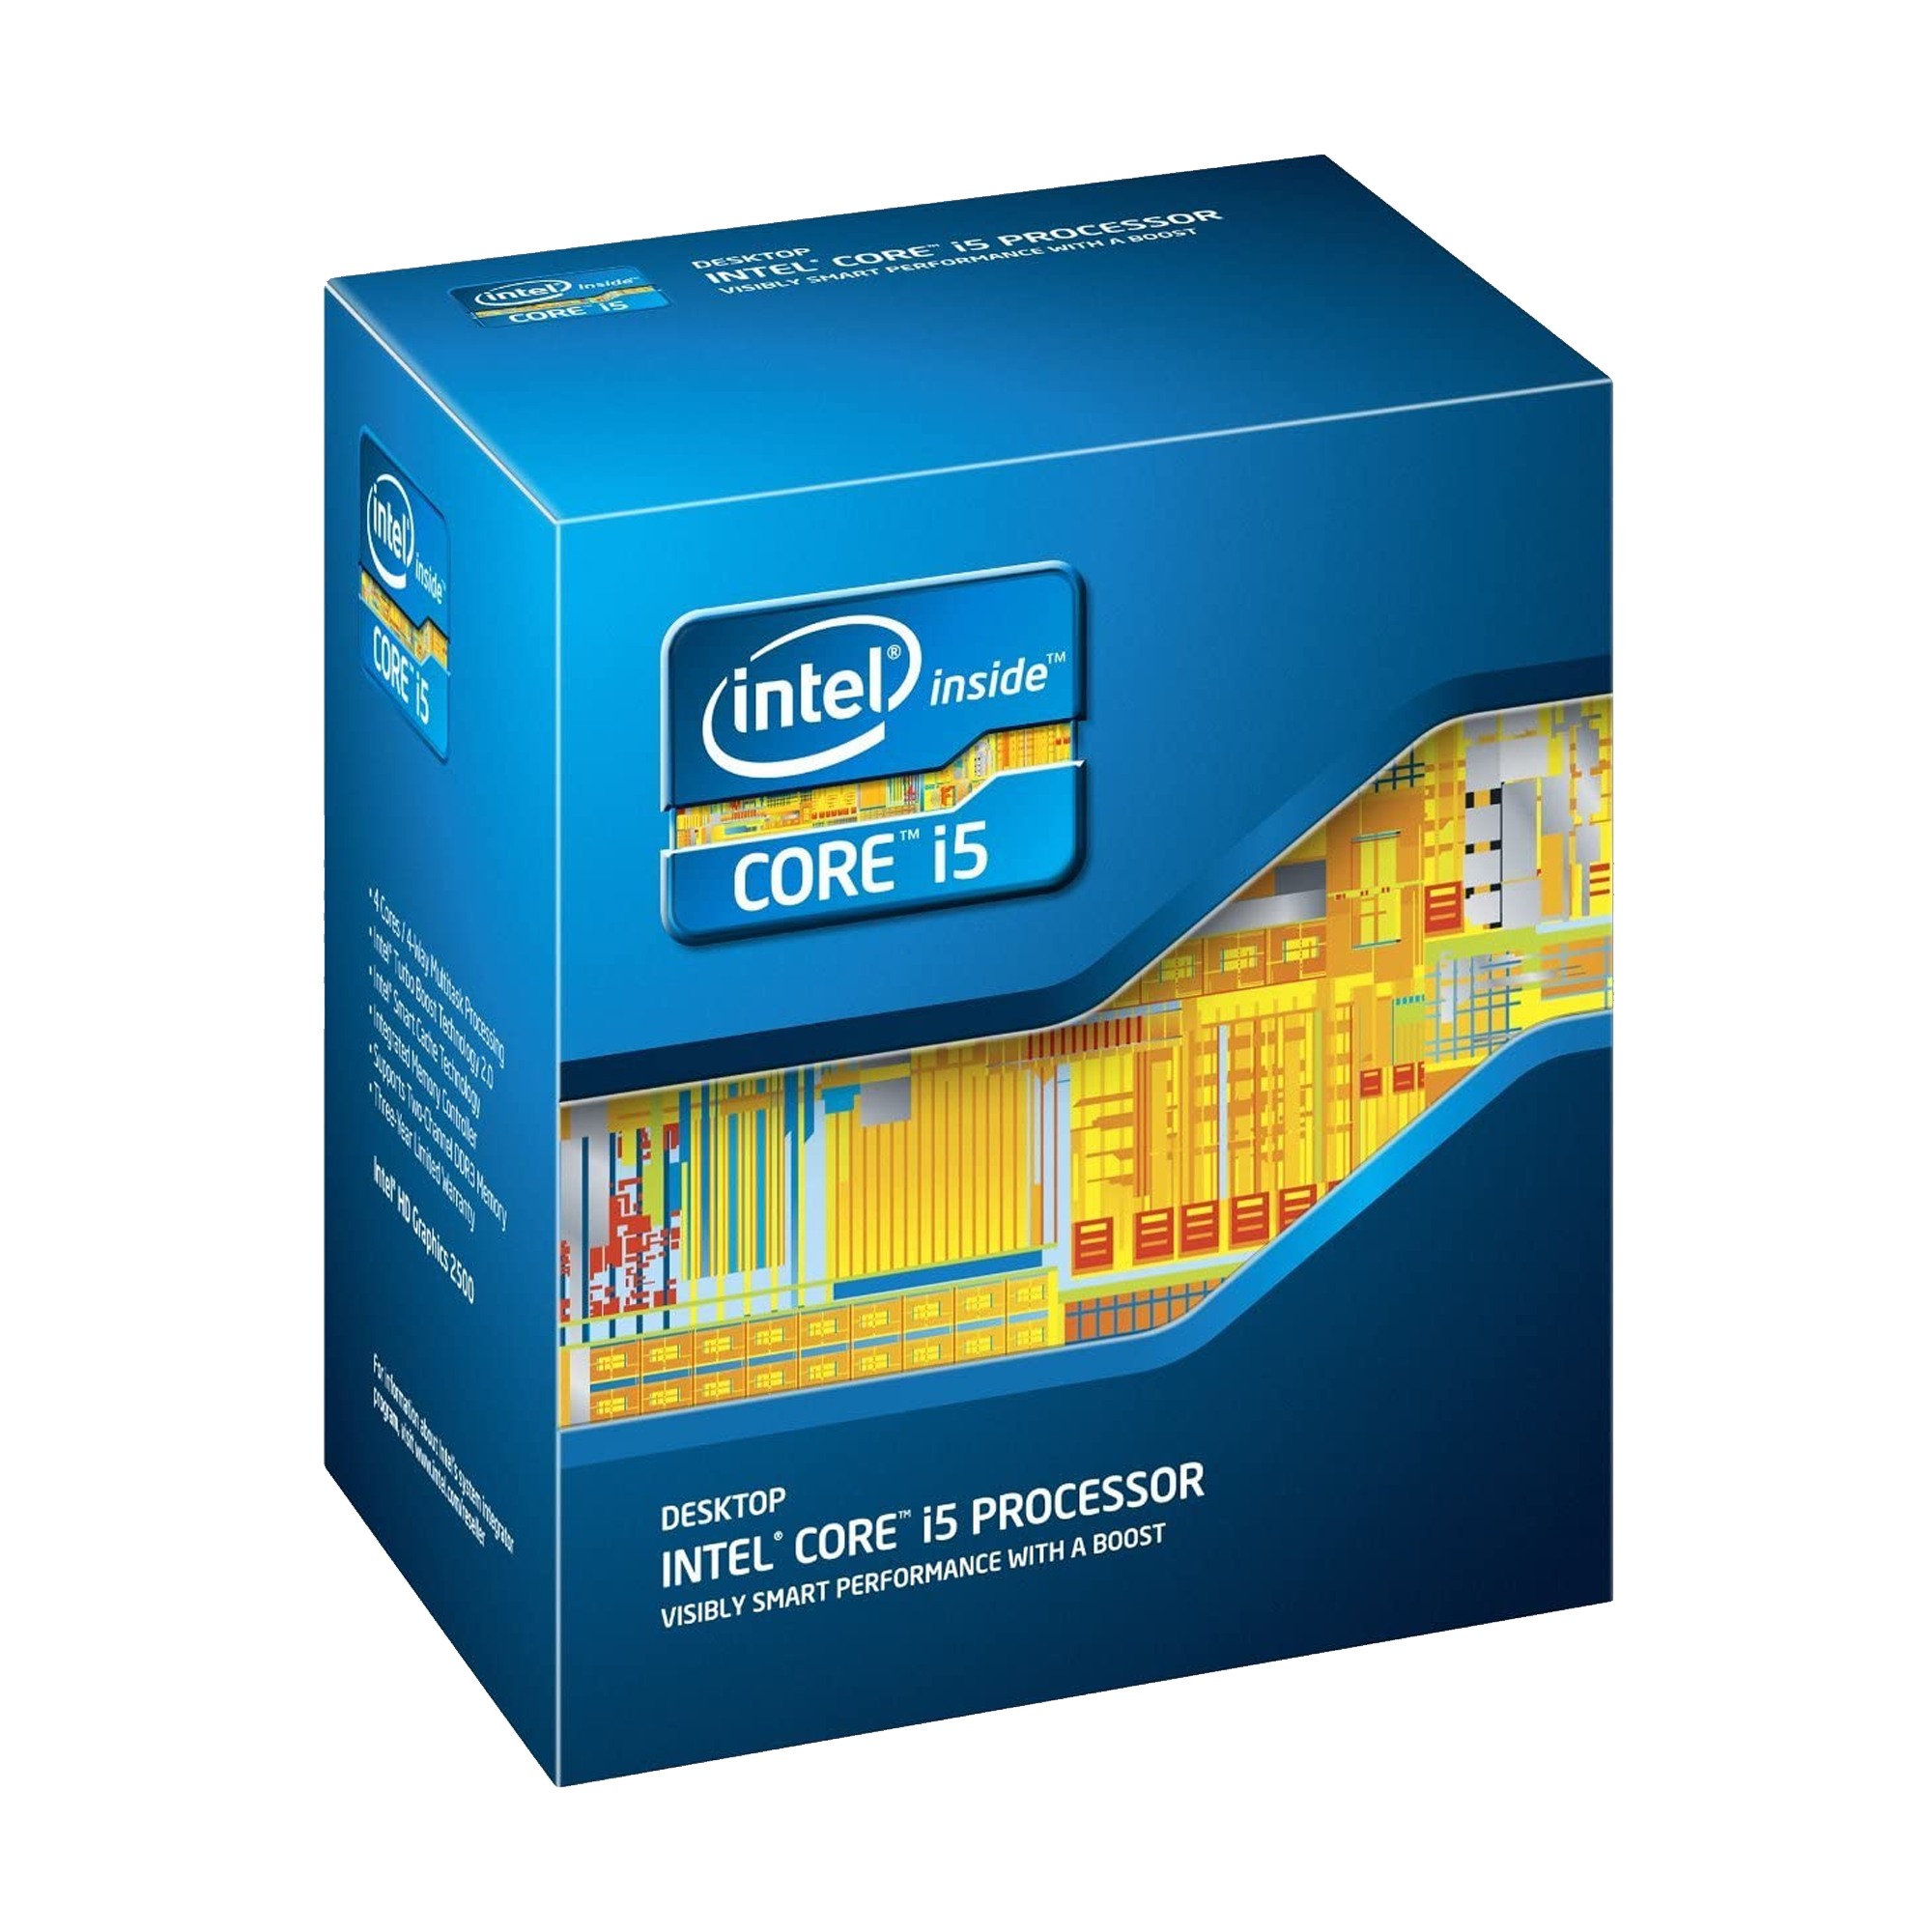 Intel Core i5-3rd Gen Used Processors